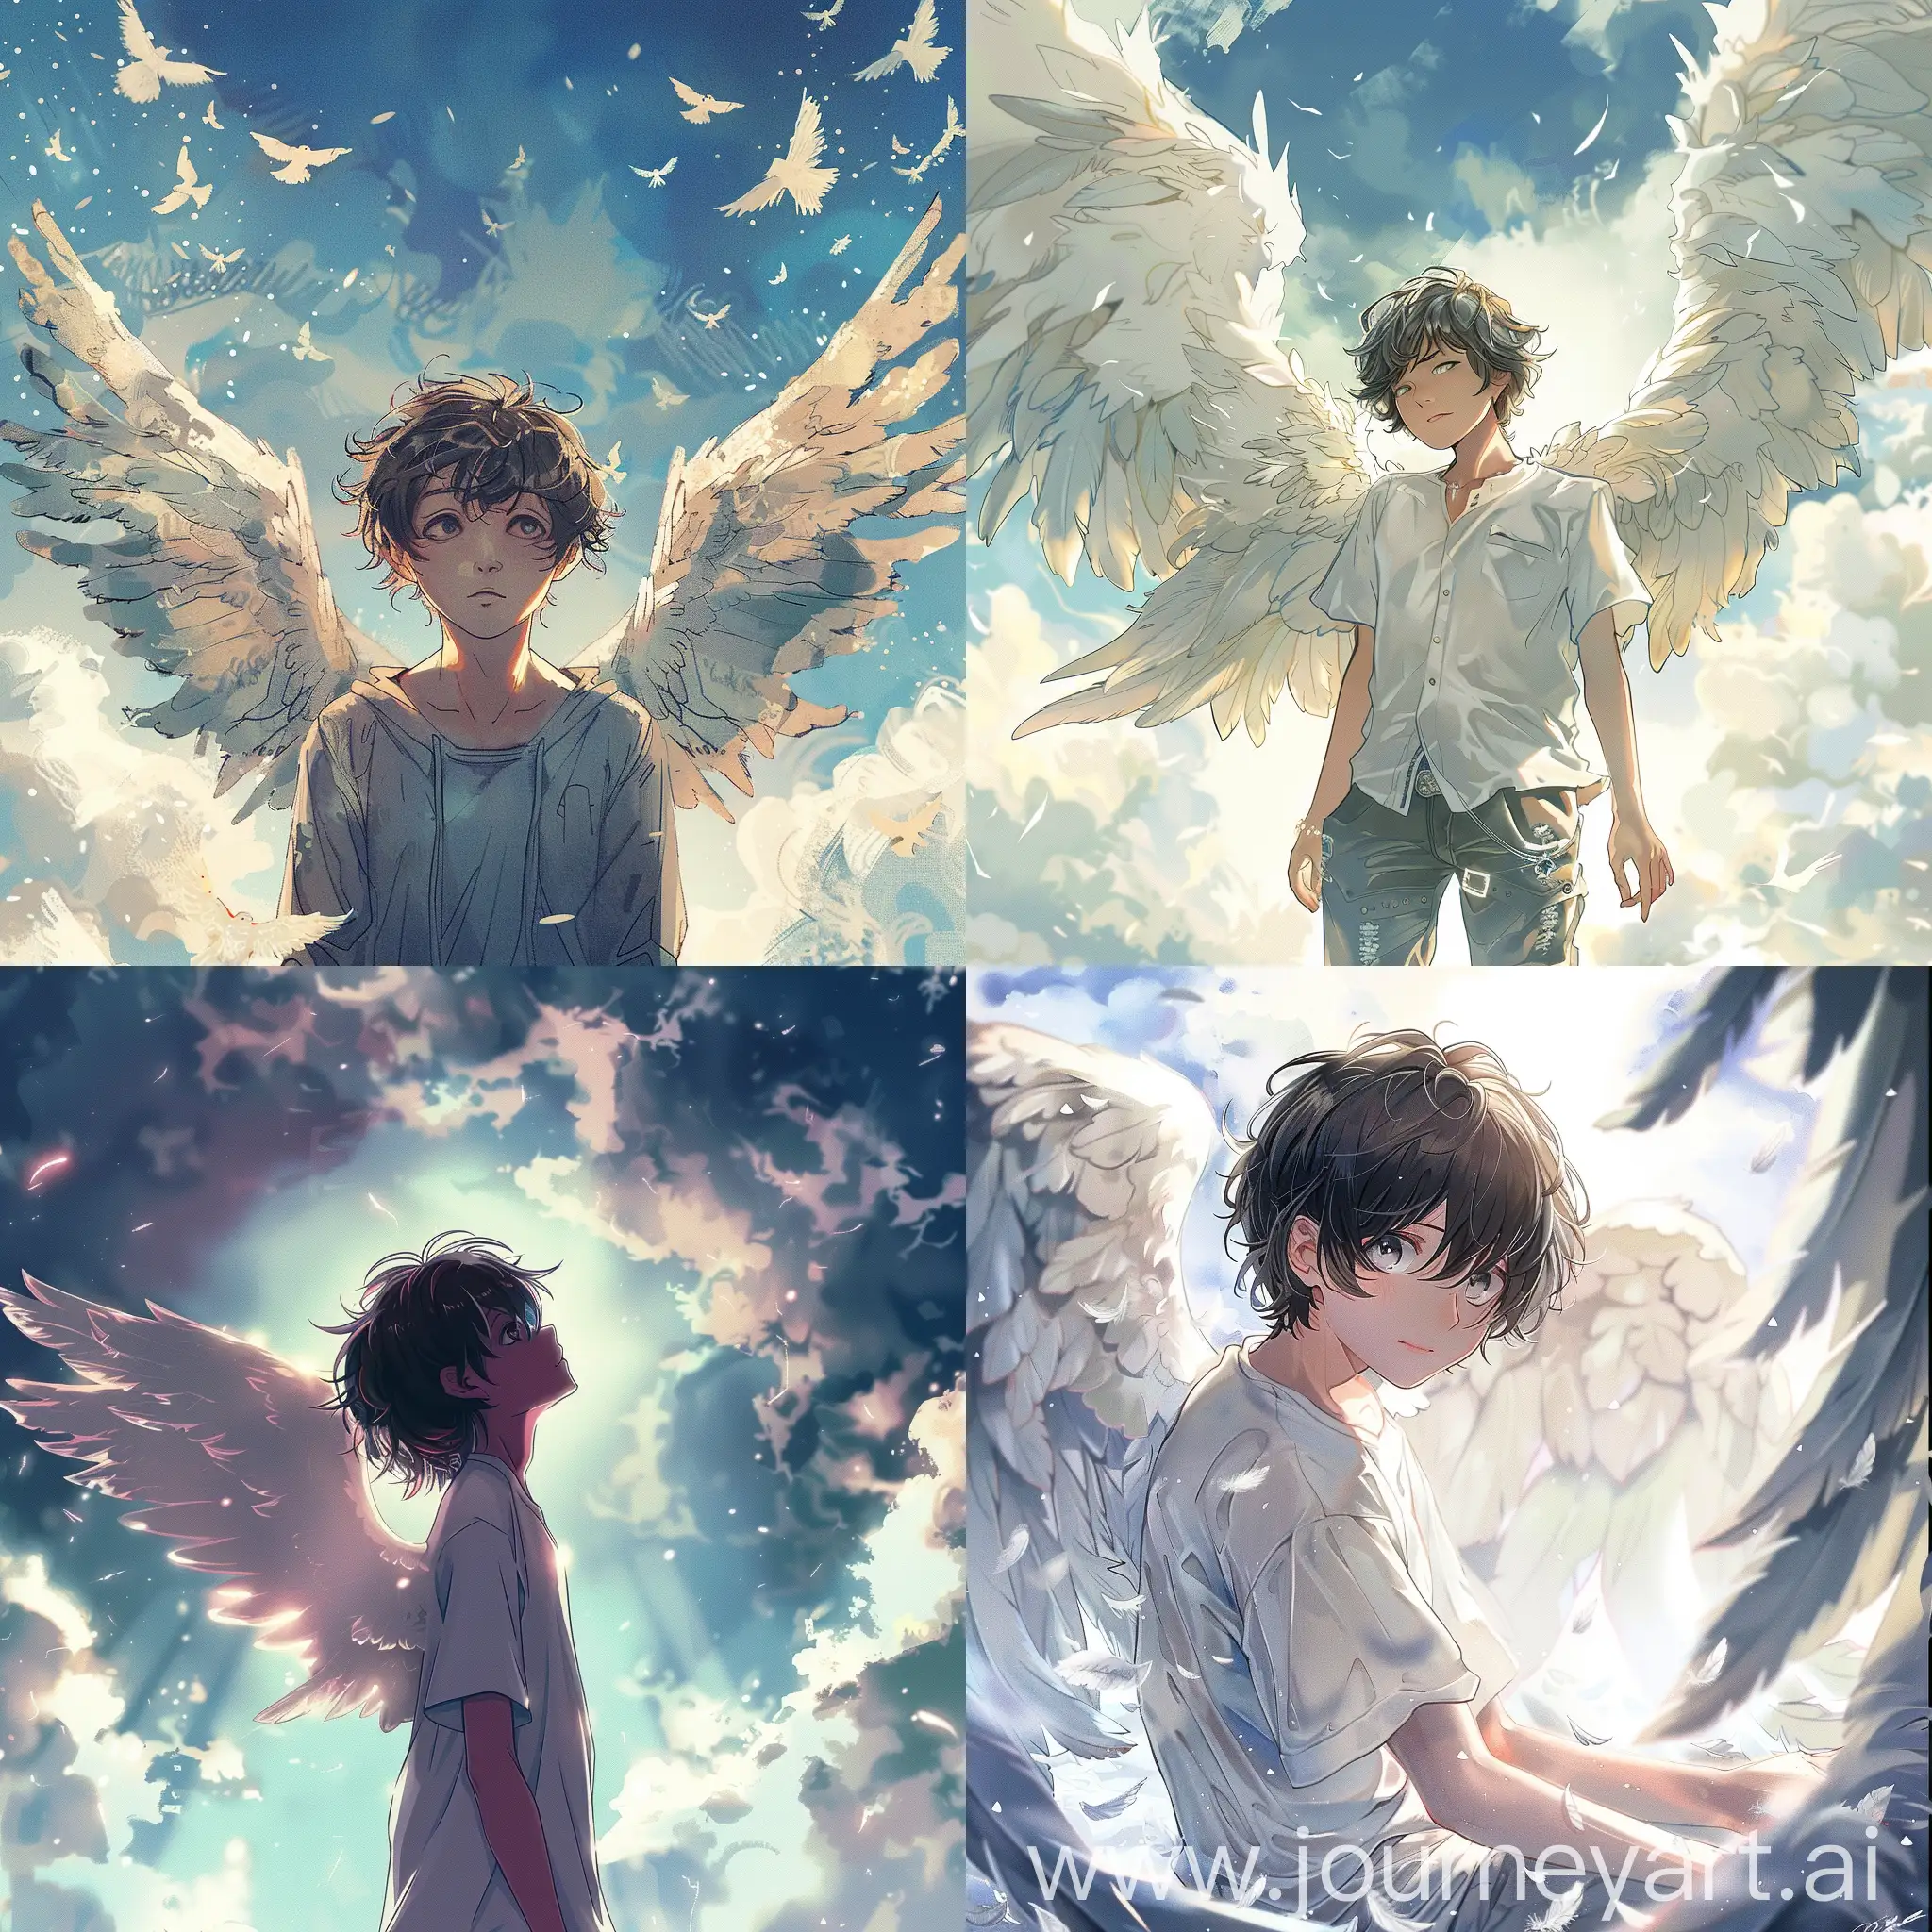 Young-Boy-Aspiring-to-Be-an-Angel